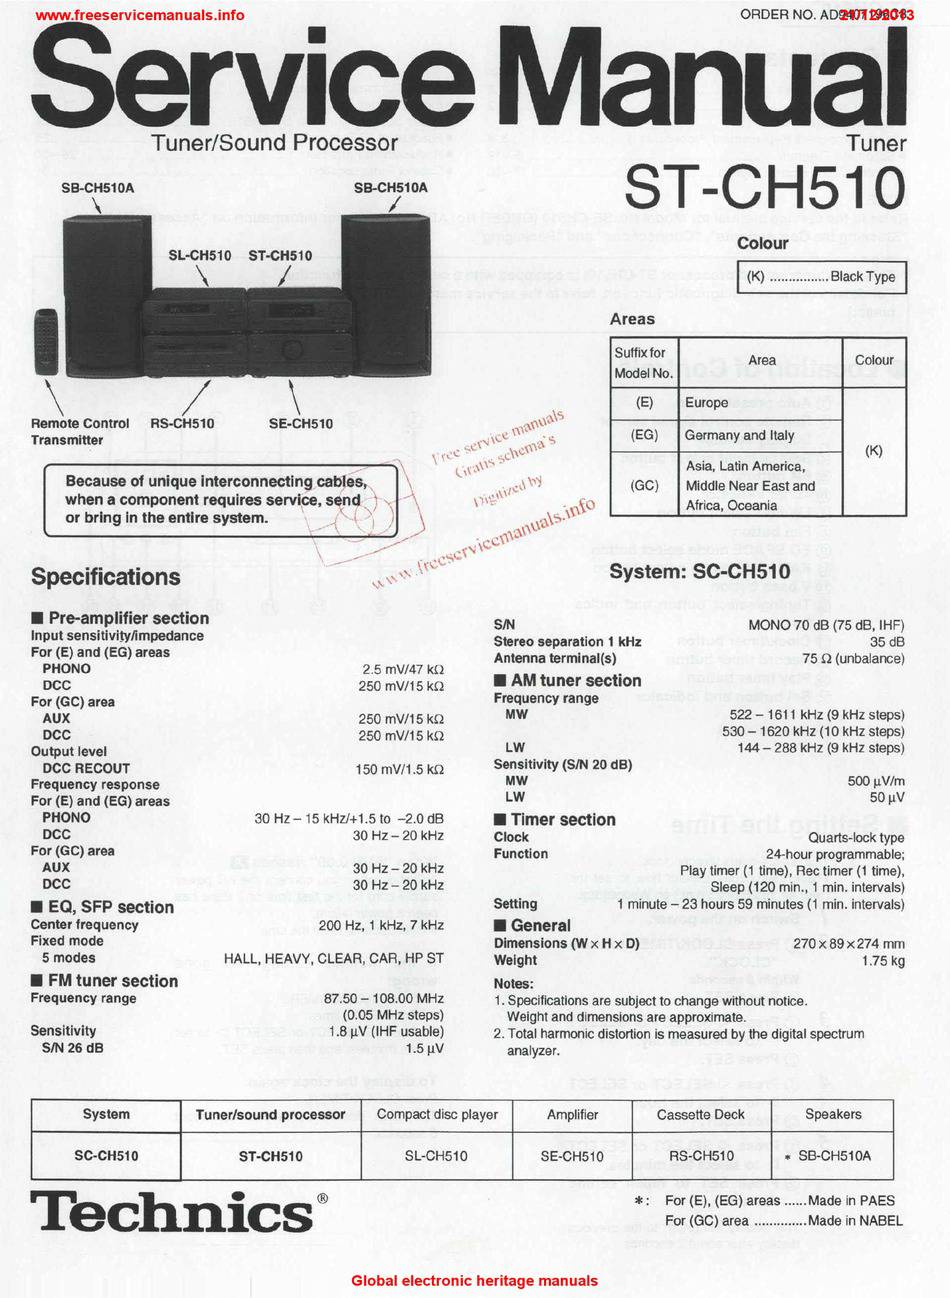 Technics SE-CH510